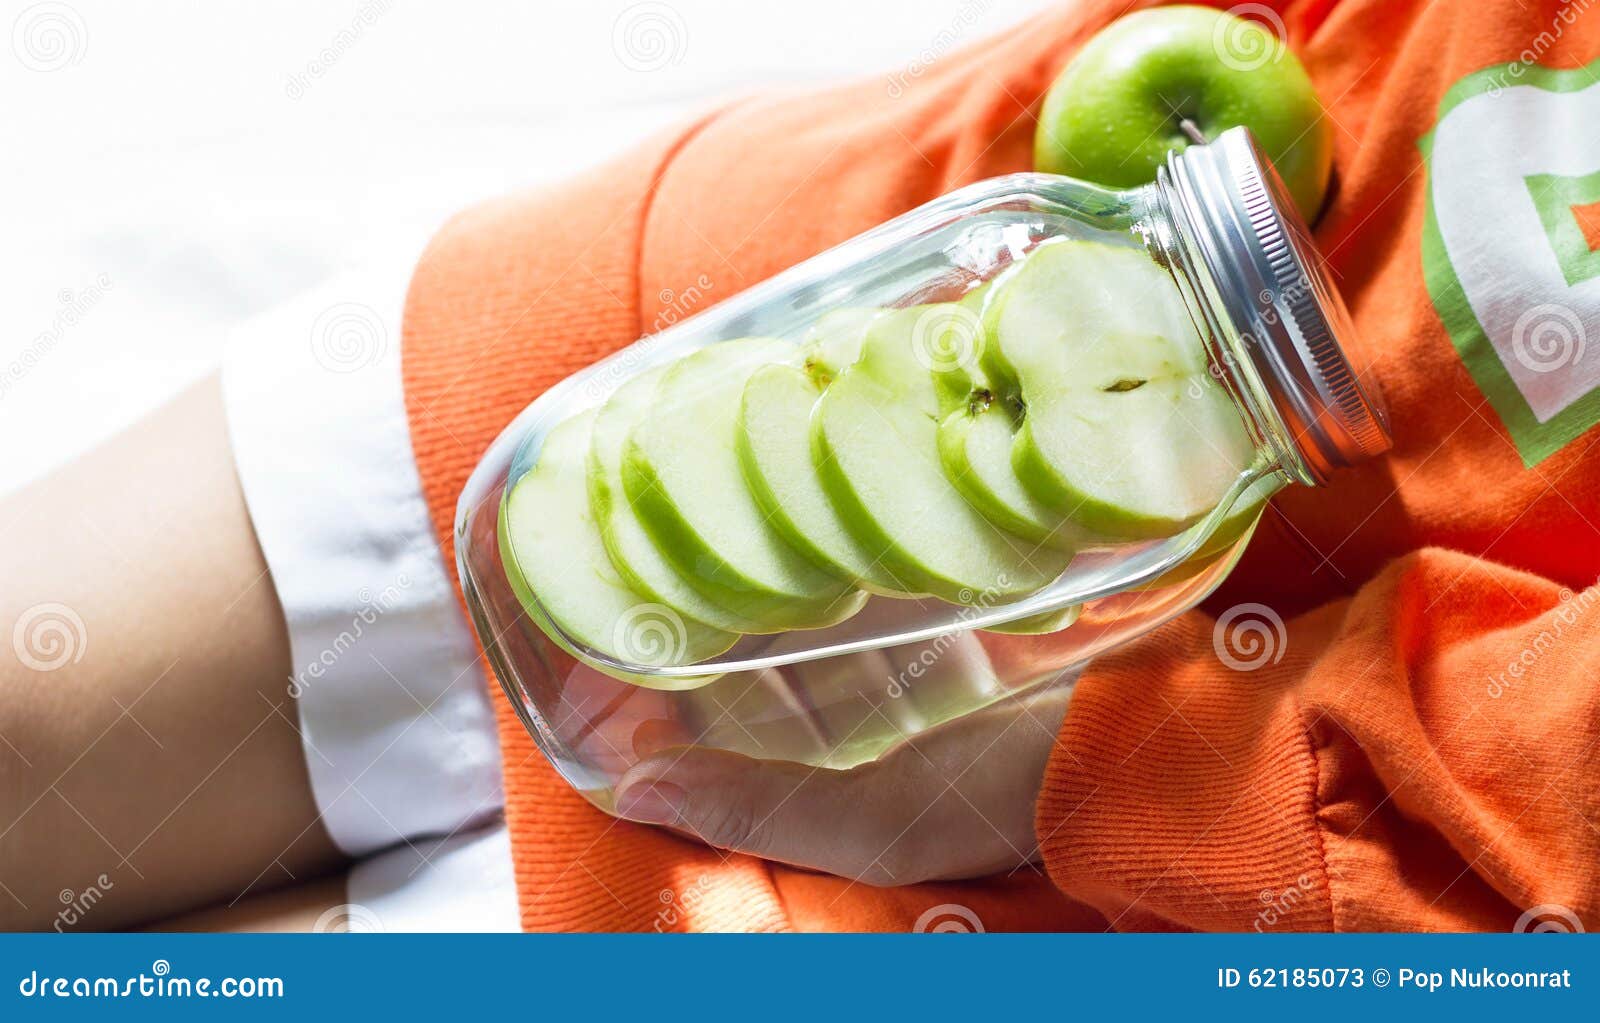 detox diet fresh green apples soak in water of the jar in woman hand